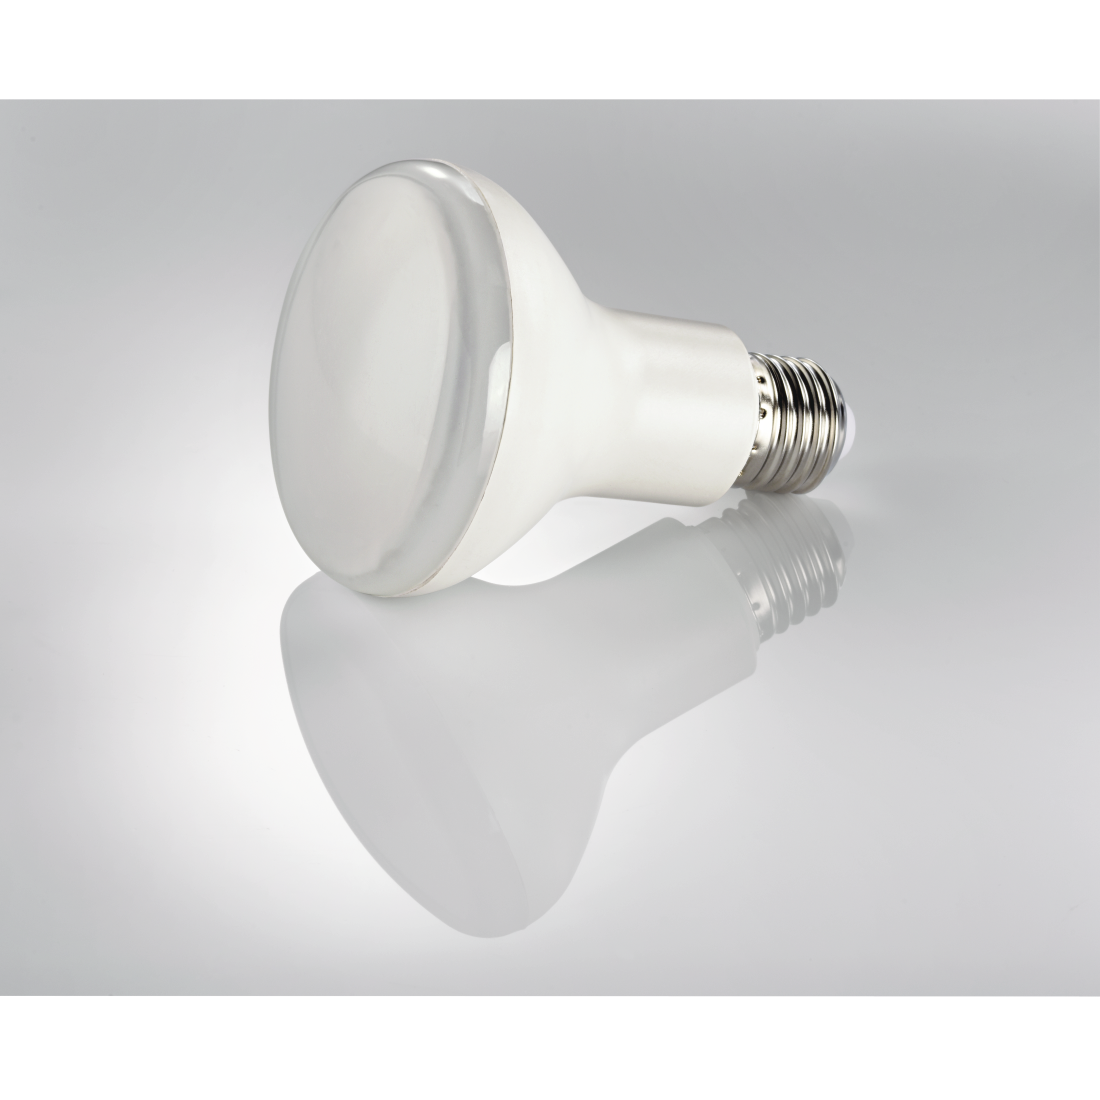 abx3 Druckfähige Abbildung 3 - Xavax, LED-Lampe, E27, 1050lm ersetzt 75W, Reflektorlampe R80, Warmweiß